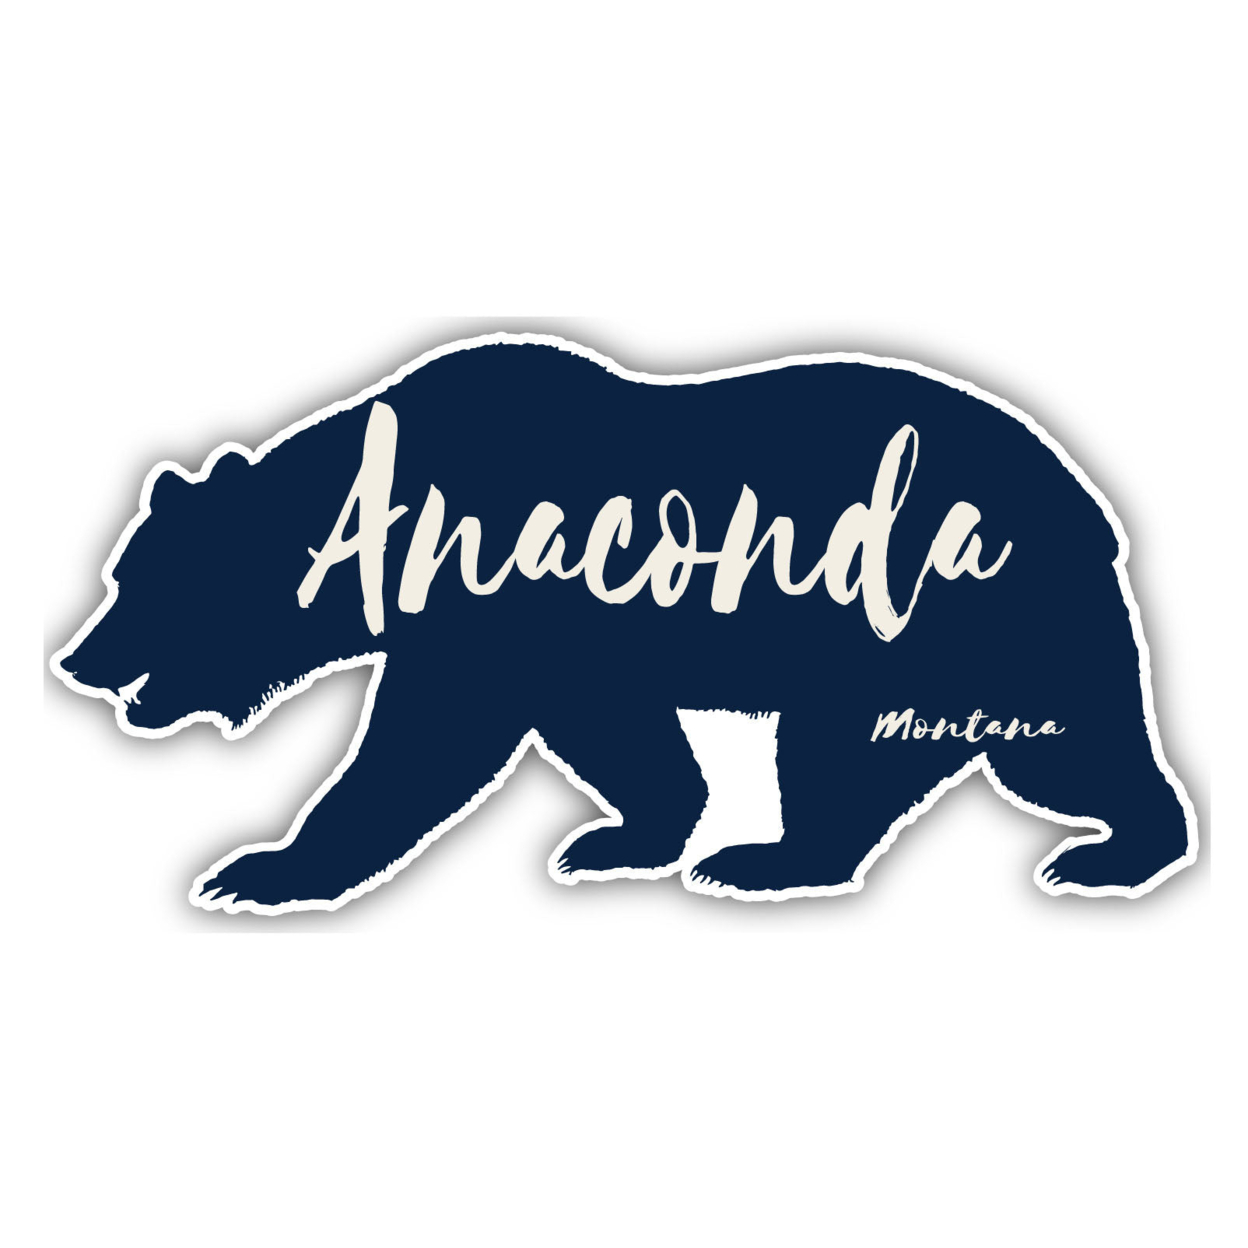 Anaconda Montana Souvenir Decorative Stickers (Choose Theme And Size) - Single Unit, 6-Inch, Bear